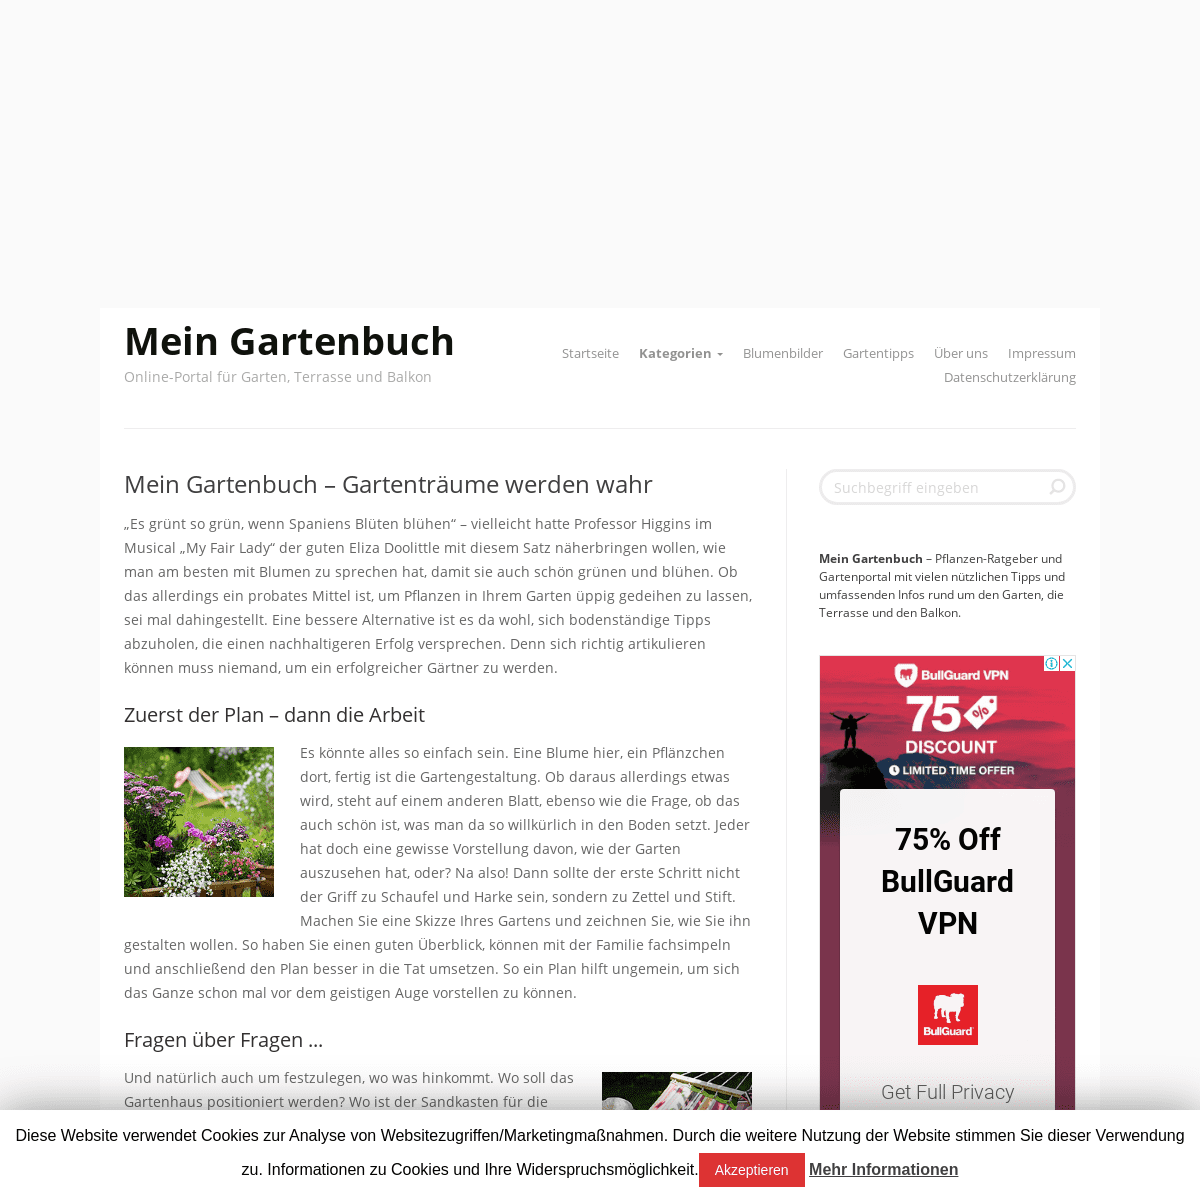 A complete backup of mein-gartenbuch.de